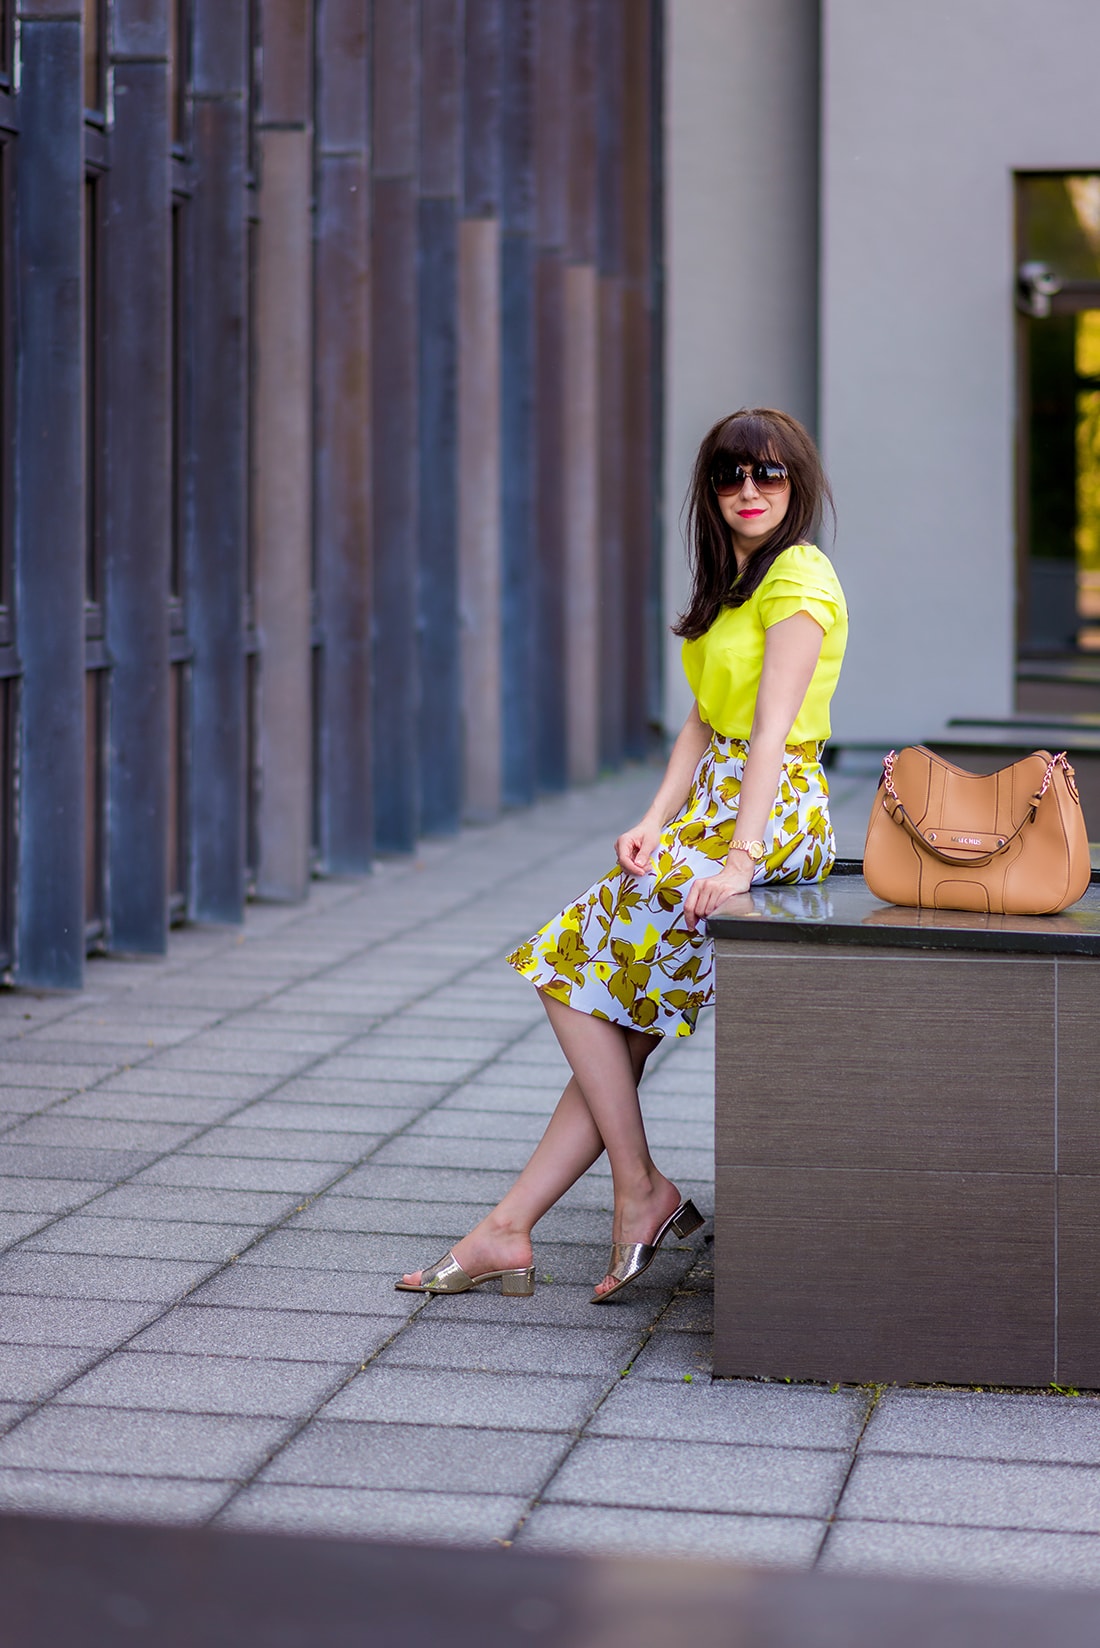 SUKŃA NA LETO OD MARGIFASHION_Katharine-fashion is beautiful_blog 7_Sukňa zelené kvety_Zlaté šľapky Sagan_Katarína Jakubčová_Fashion blogger